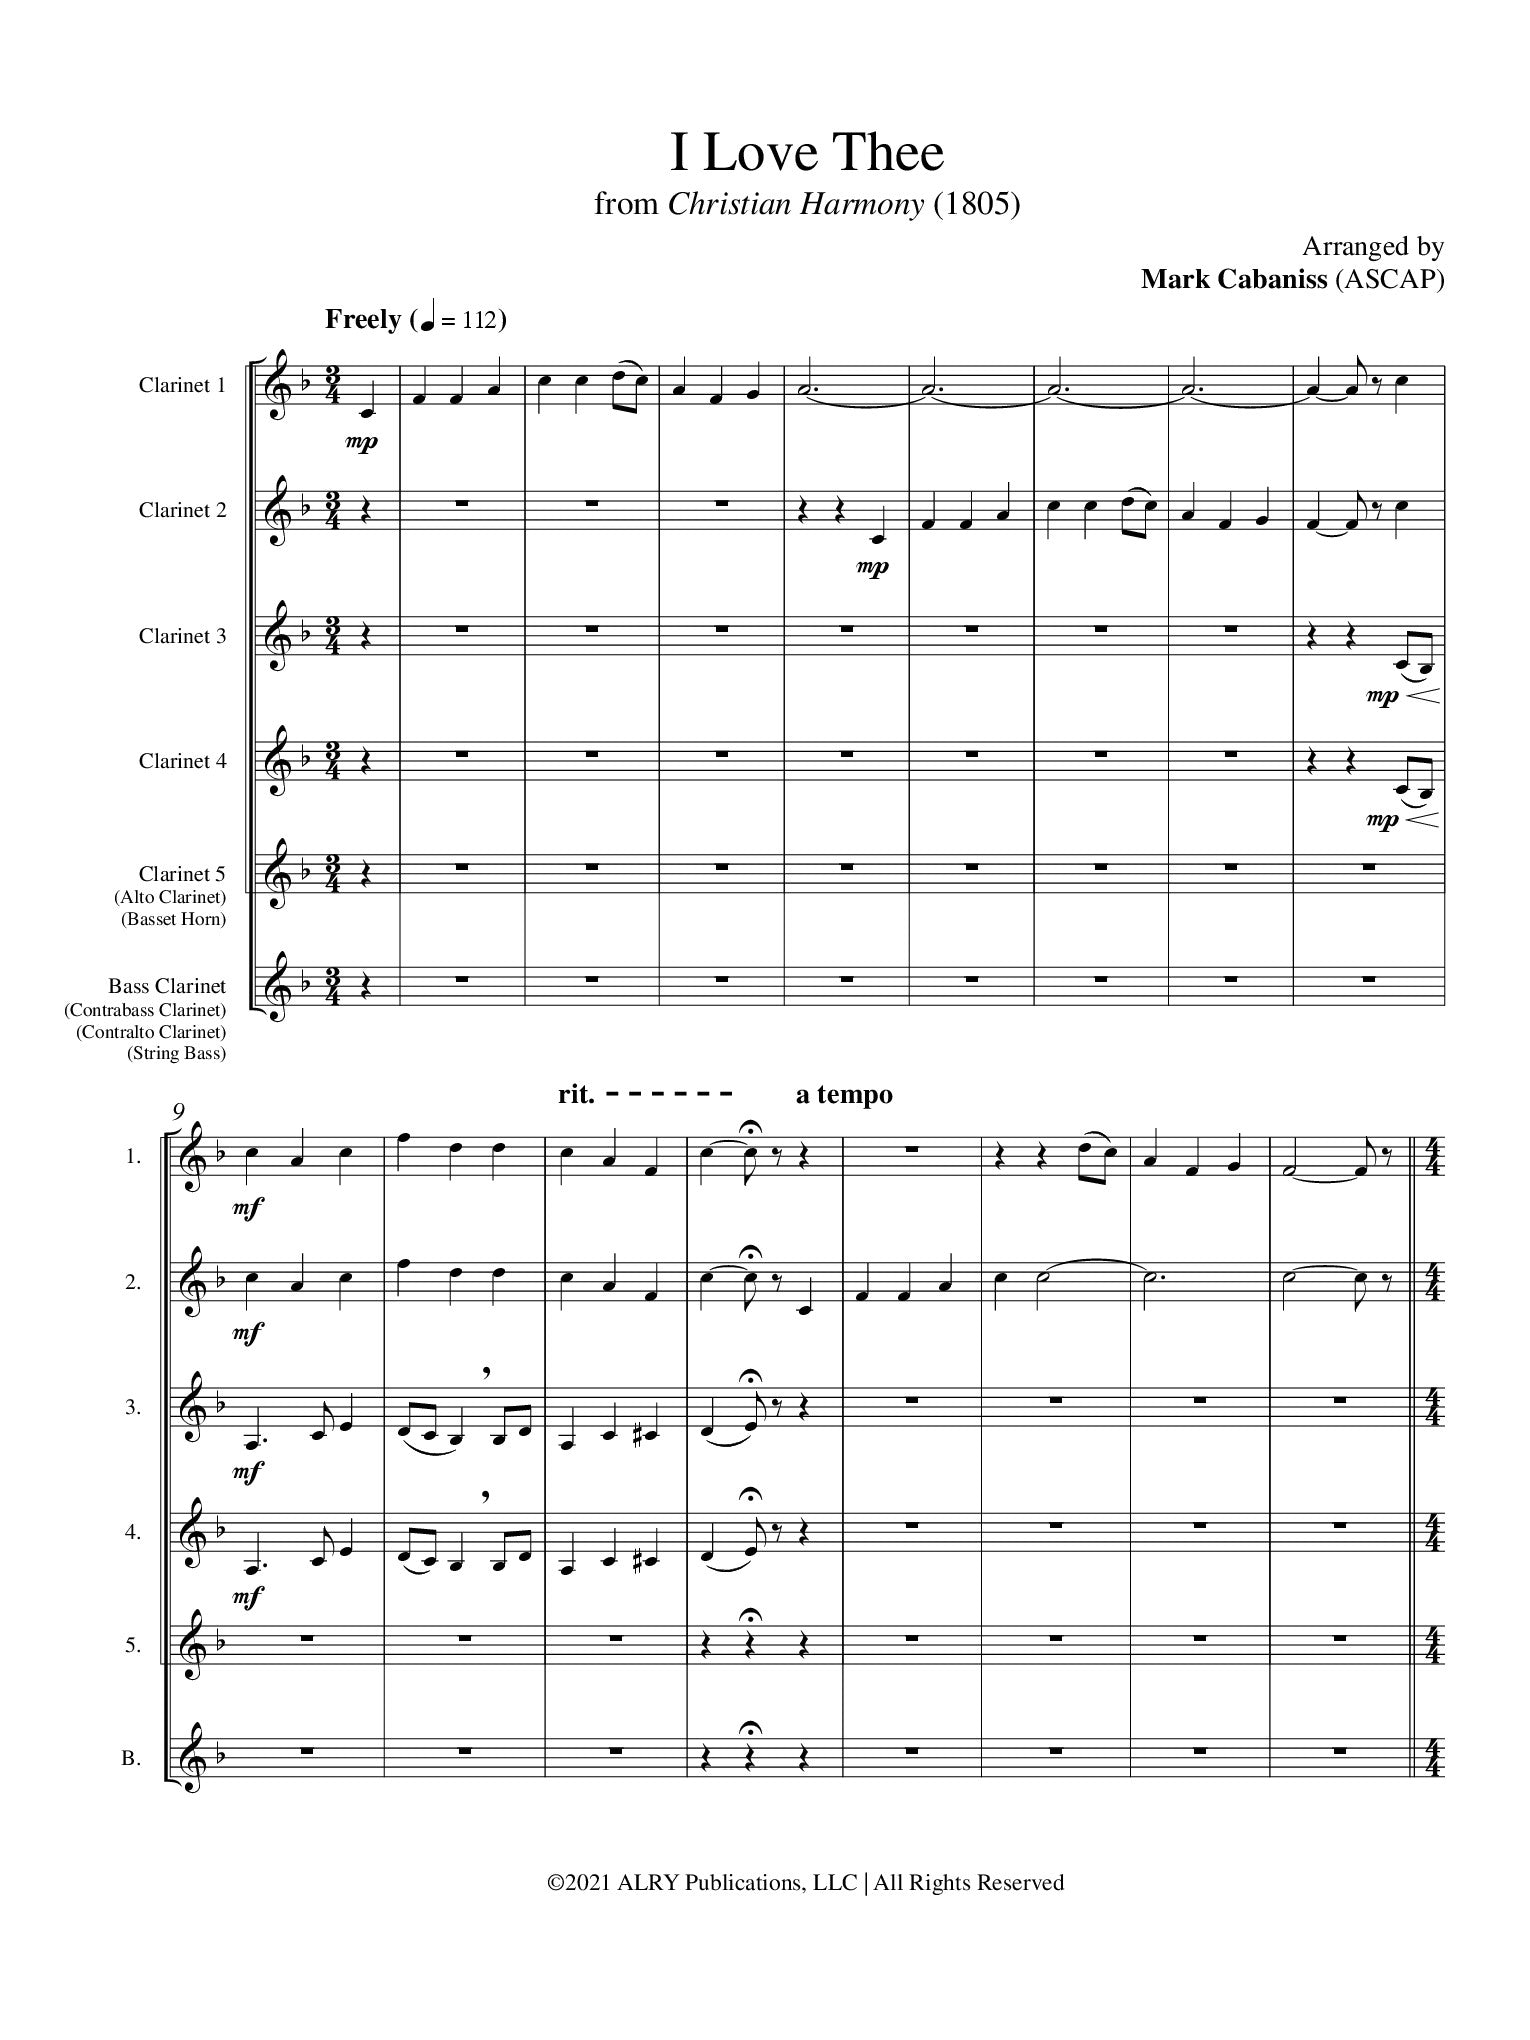 Cabaniss (arr. Matt Johnston) - I Love Thee for Clarinet Choir